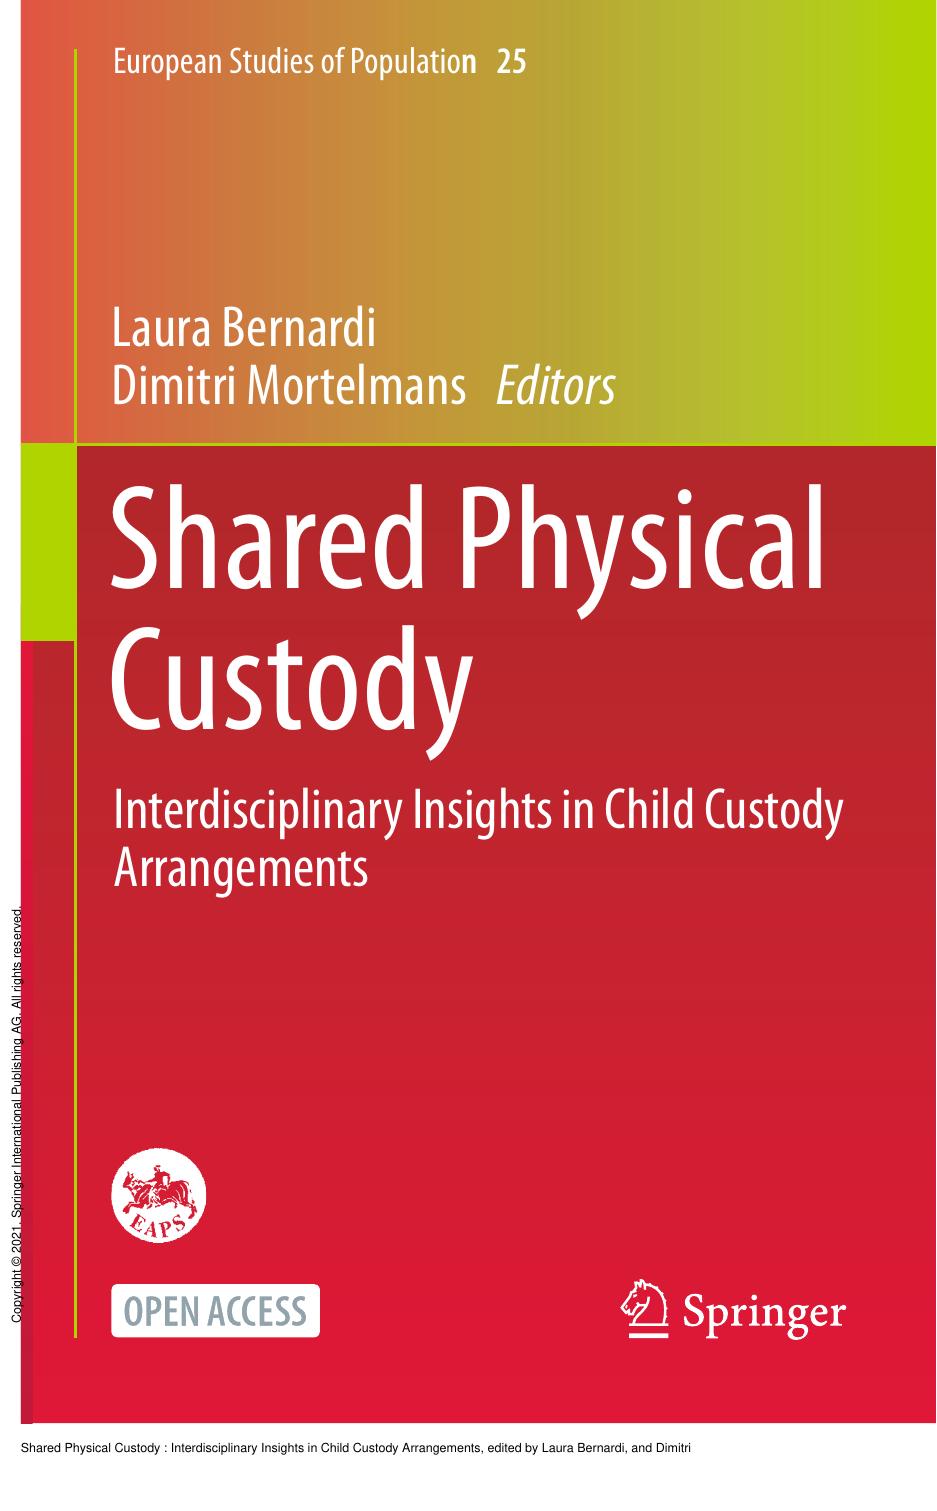 Shared Physical Custody : Interdisciplinary Insights in Child Custody Arrangements by Laura Bernardi; Dimitri Mortelmans